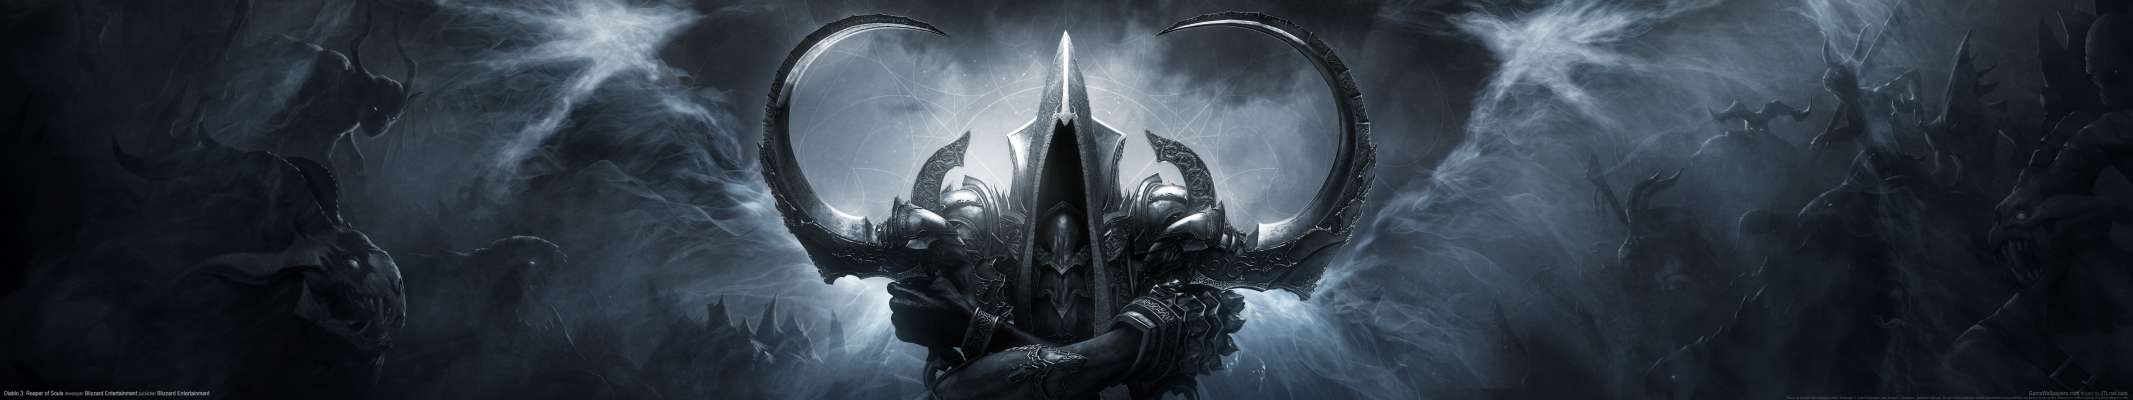 Diablo 3: Reaper of Souls triple screen fondo de escritorio